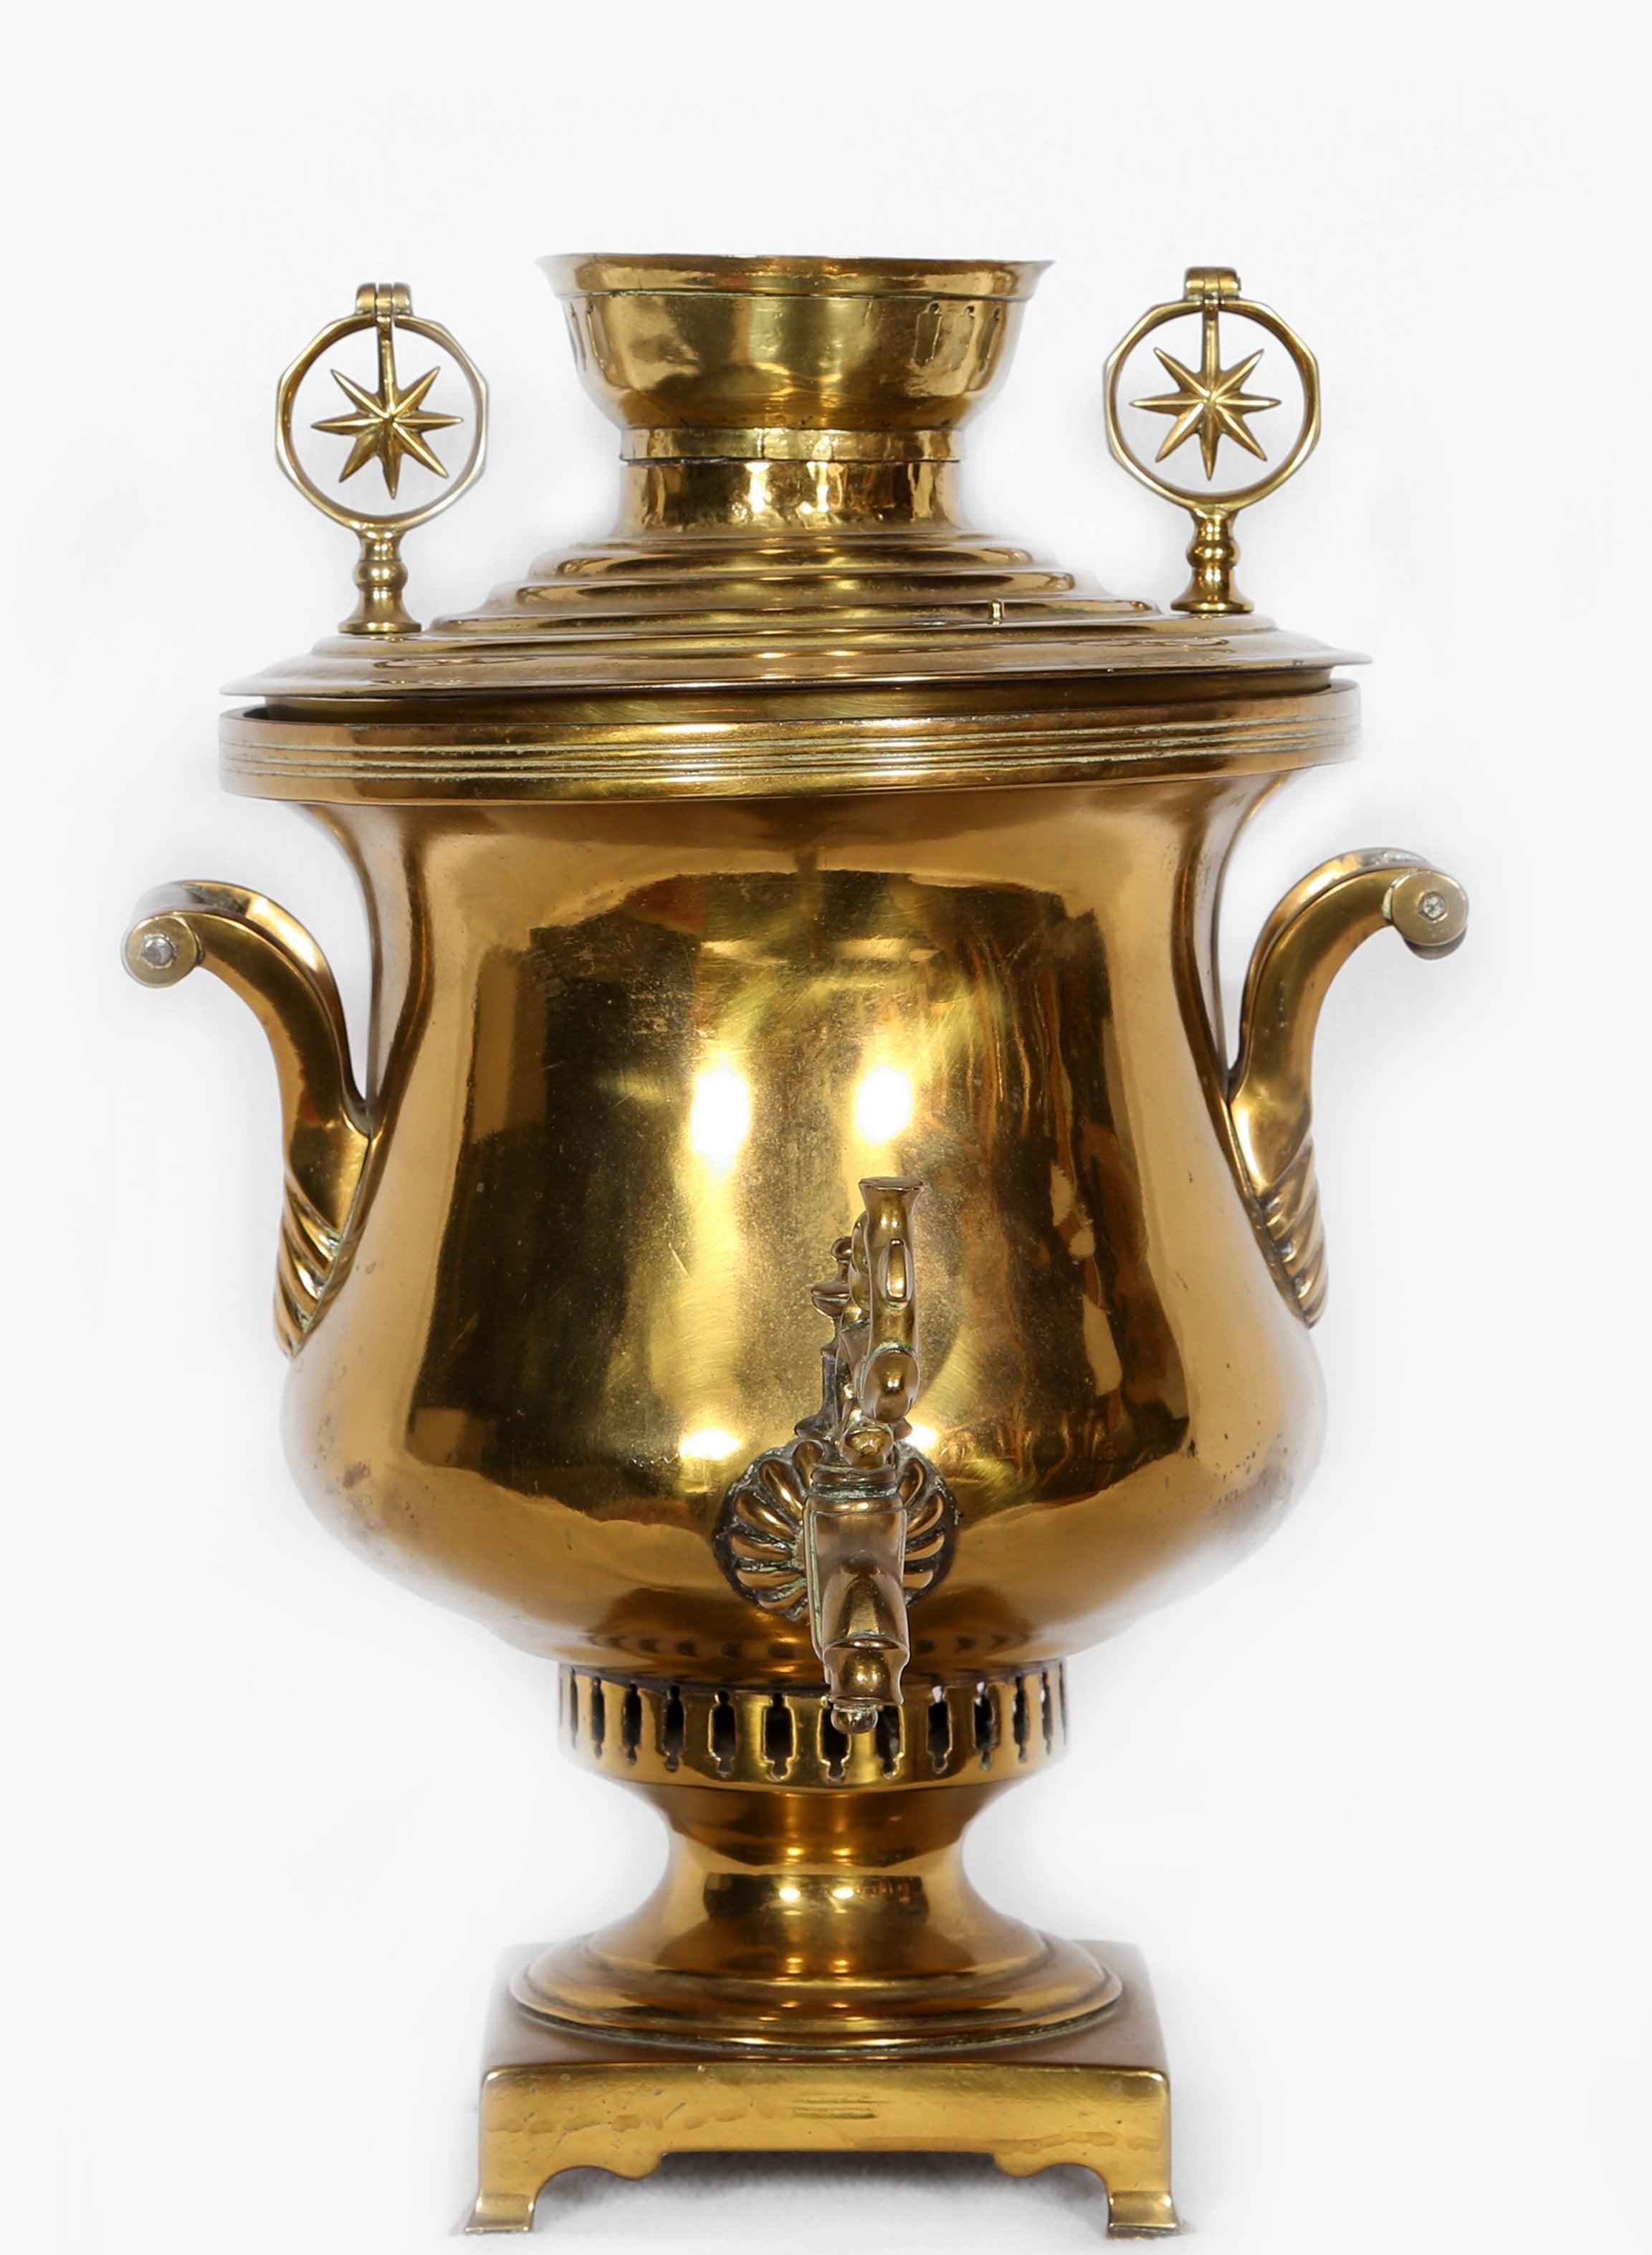 Antique Brass Russian Samovar Award Winning With Award Marks